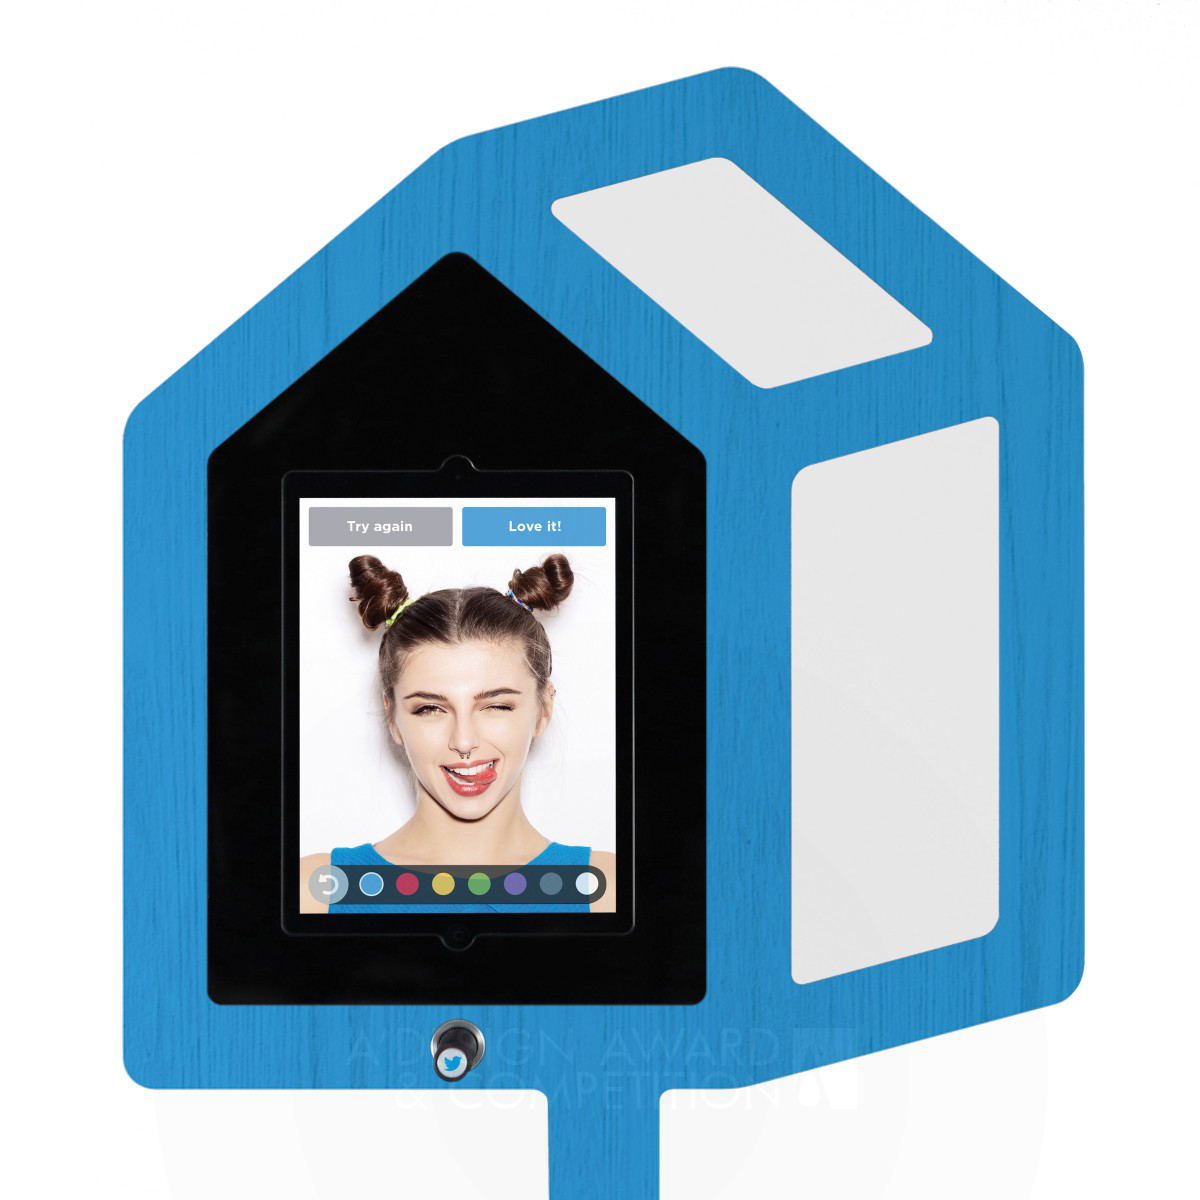 Pip Tompkin Design Social networking selfie booth